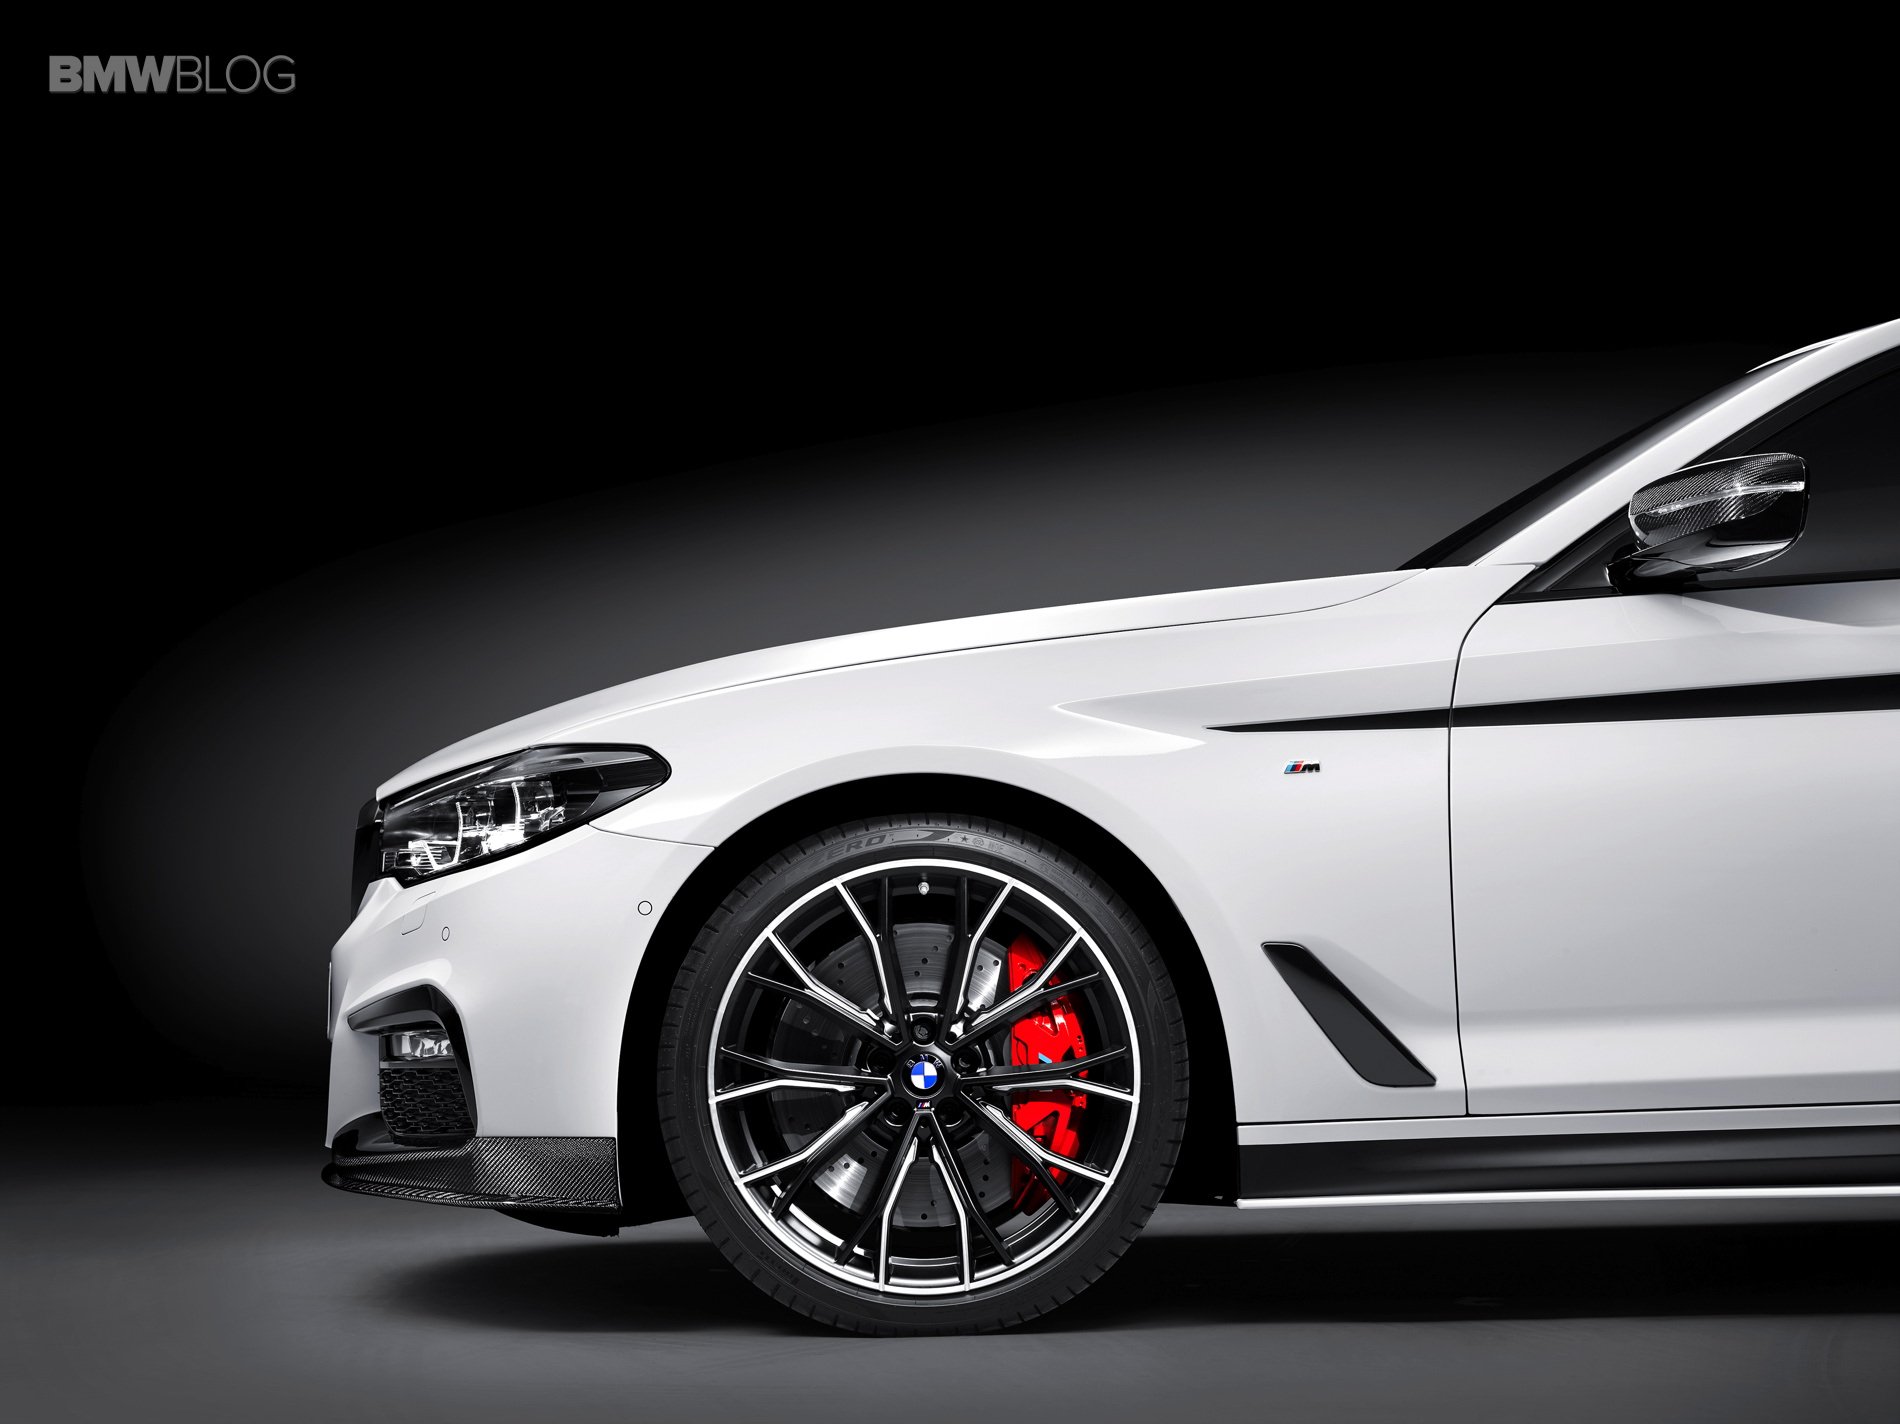 2017 BMW 5 Series Sedan With M Performance Accessories Premiered